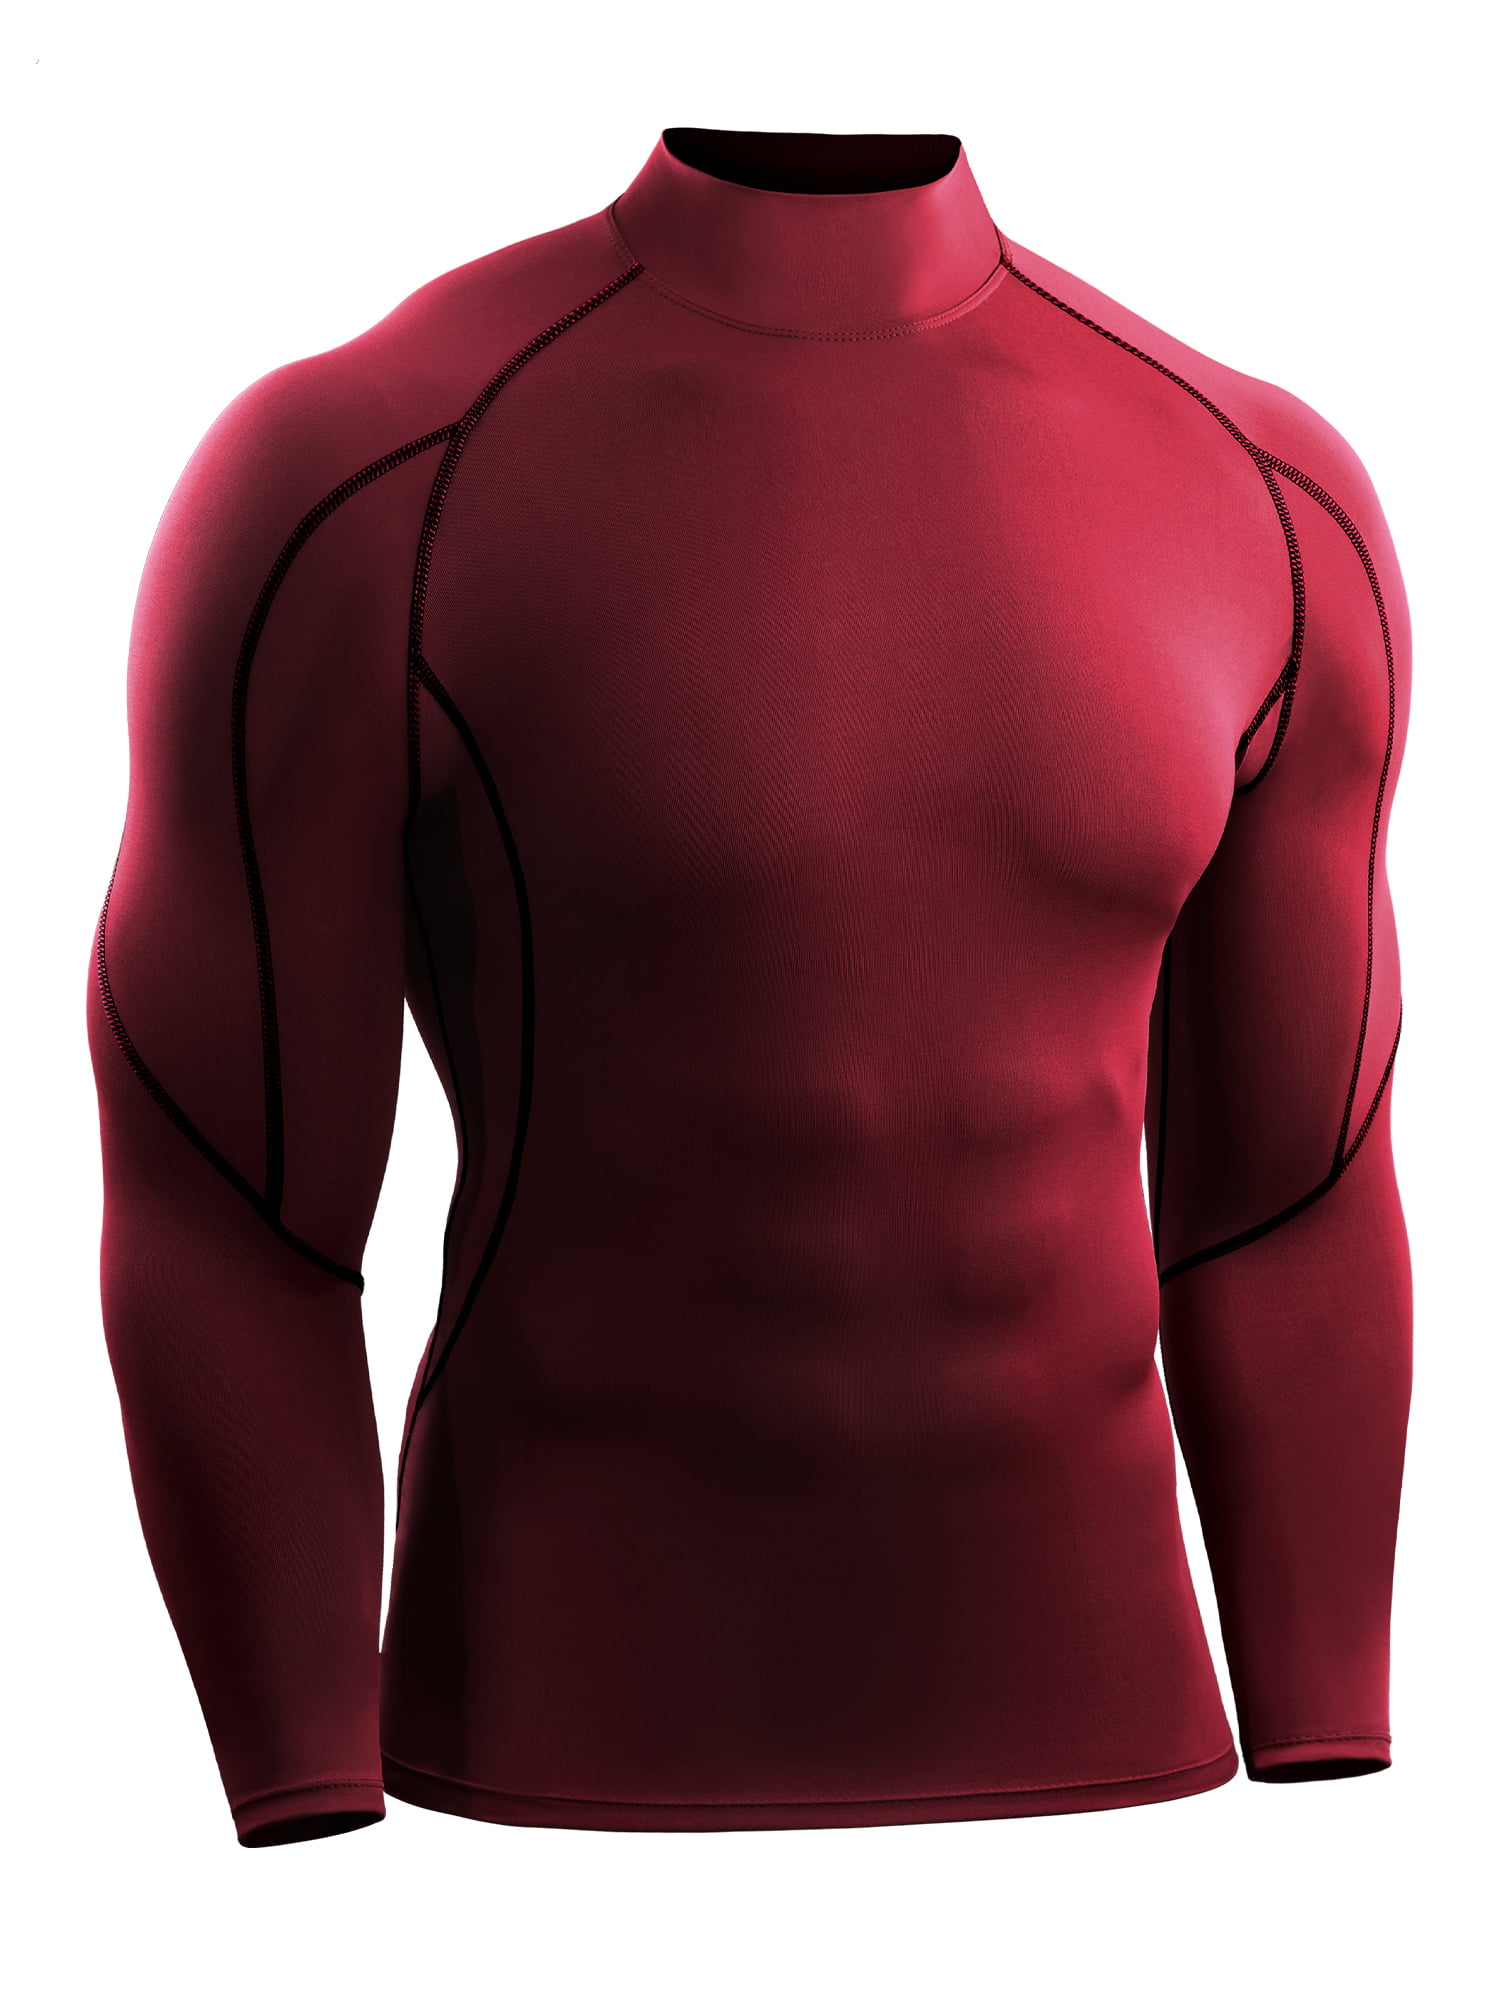 Men's Compression T-Shirt Mock Neck Skin Base layer Pro Workout Top Long Sleeve 